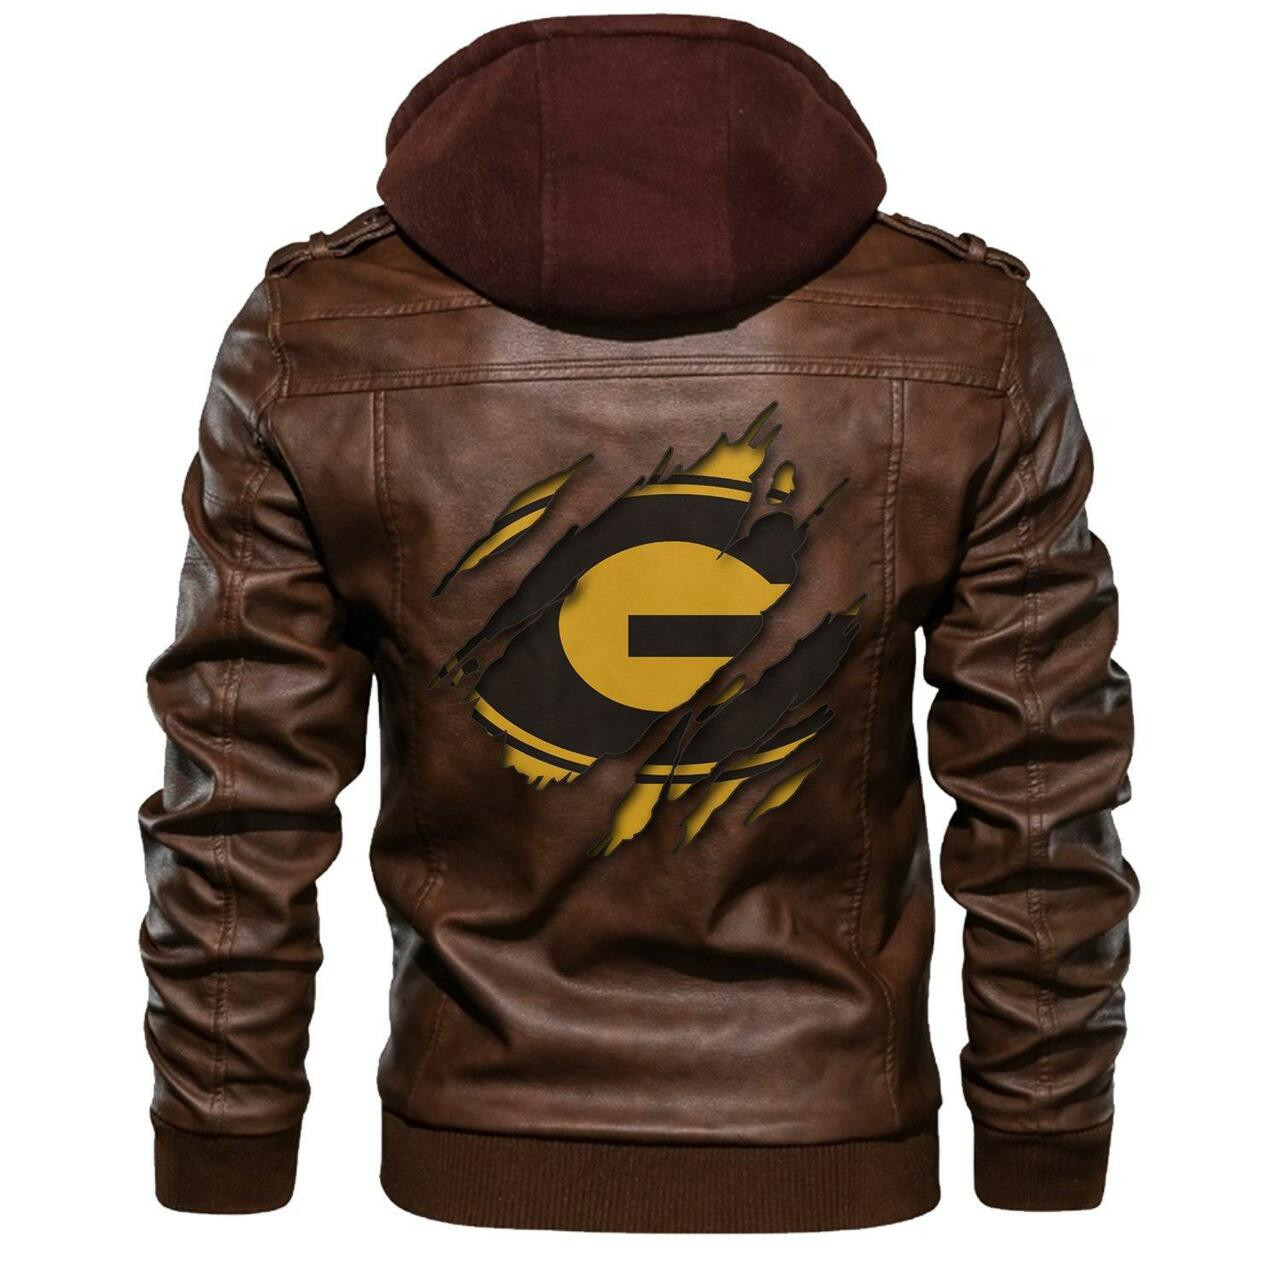 Top leather jacket Sells Best on Techcomshop 93